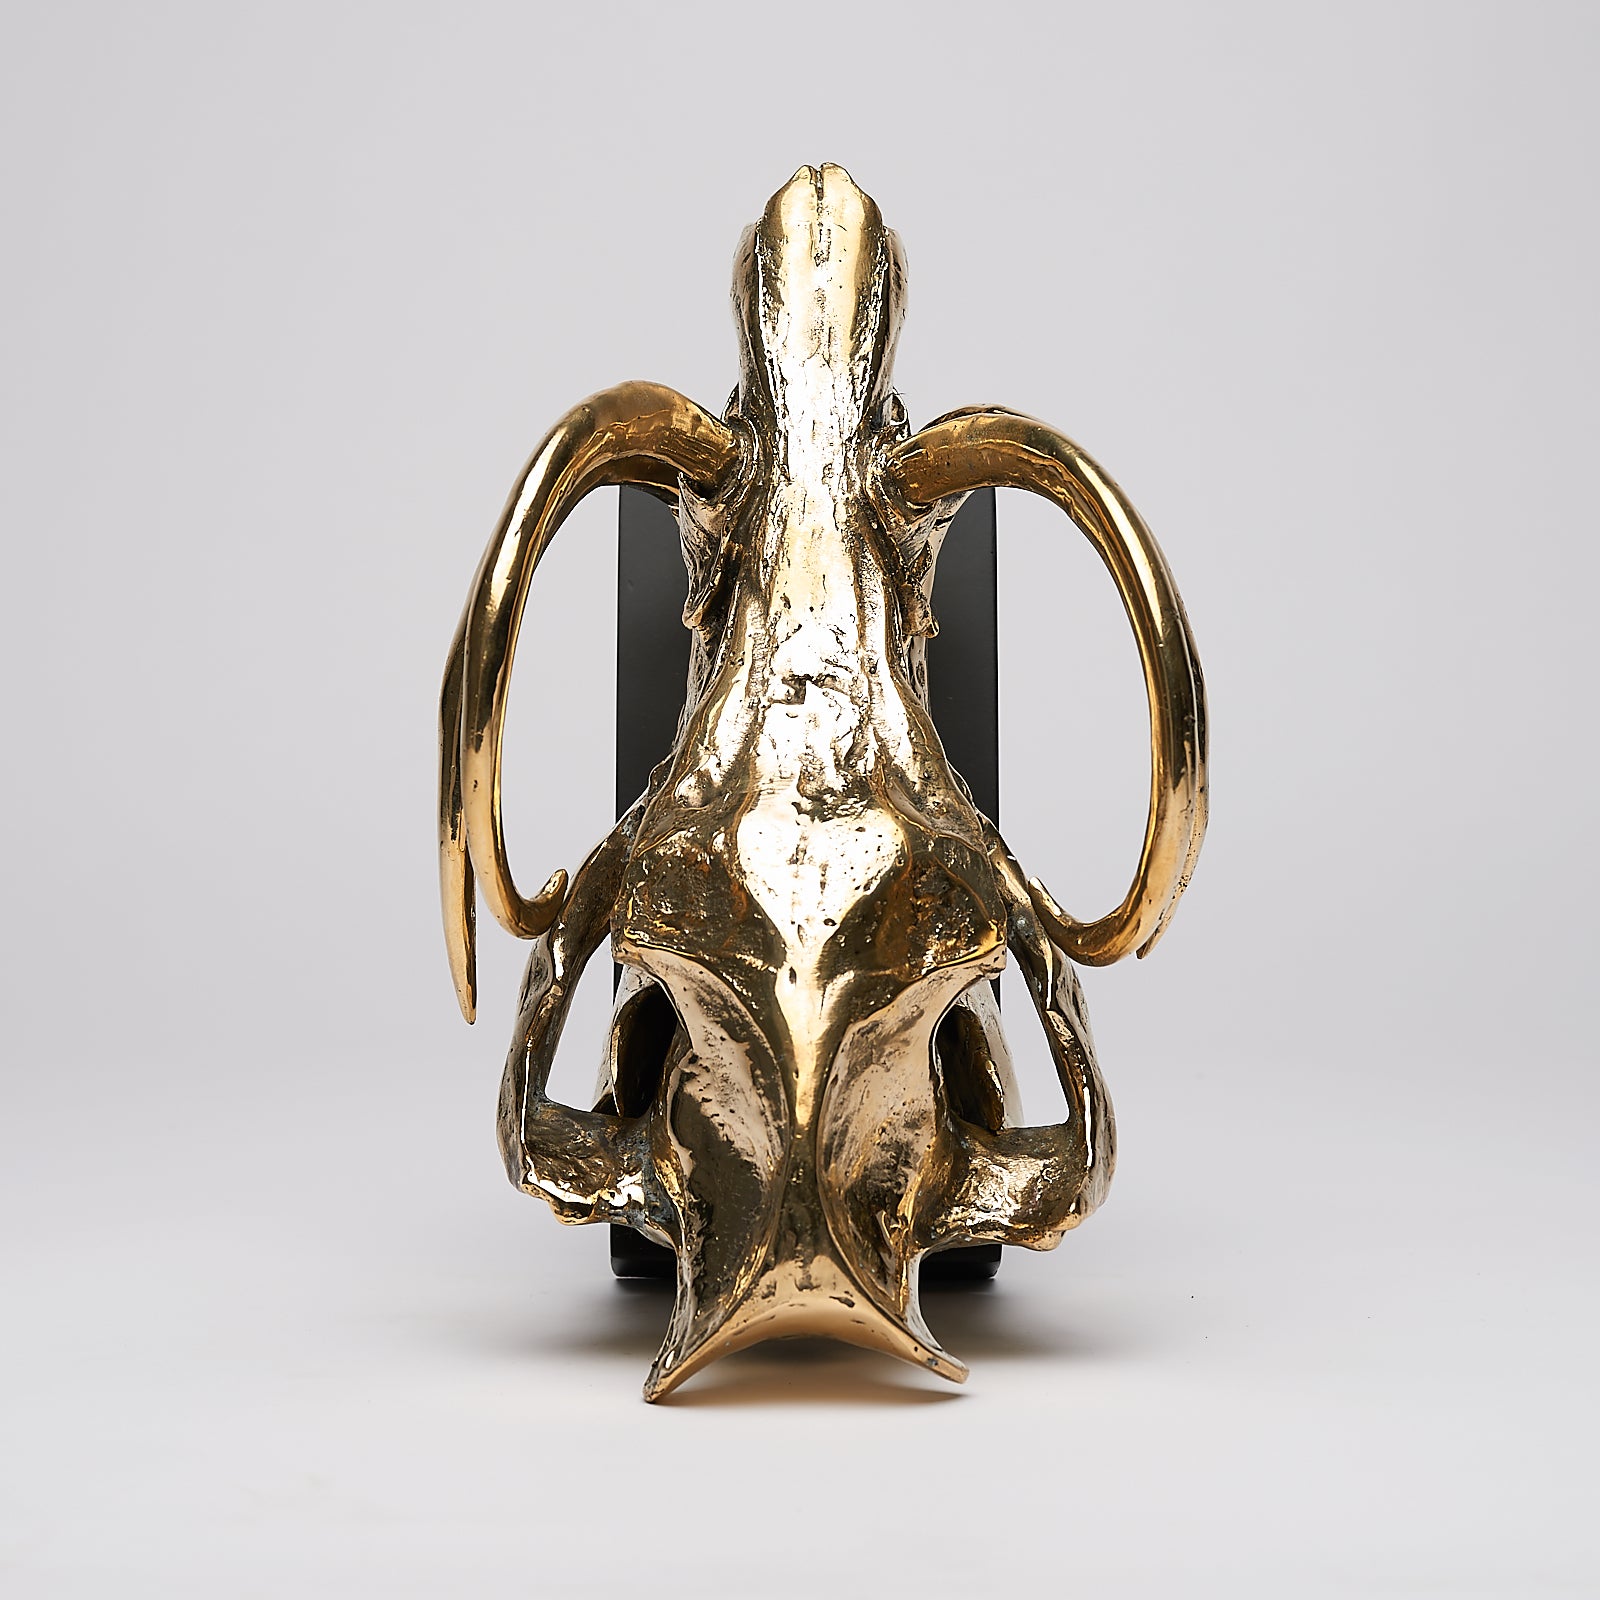 Babirusa Skull in polished bronze